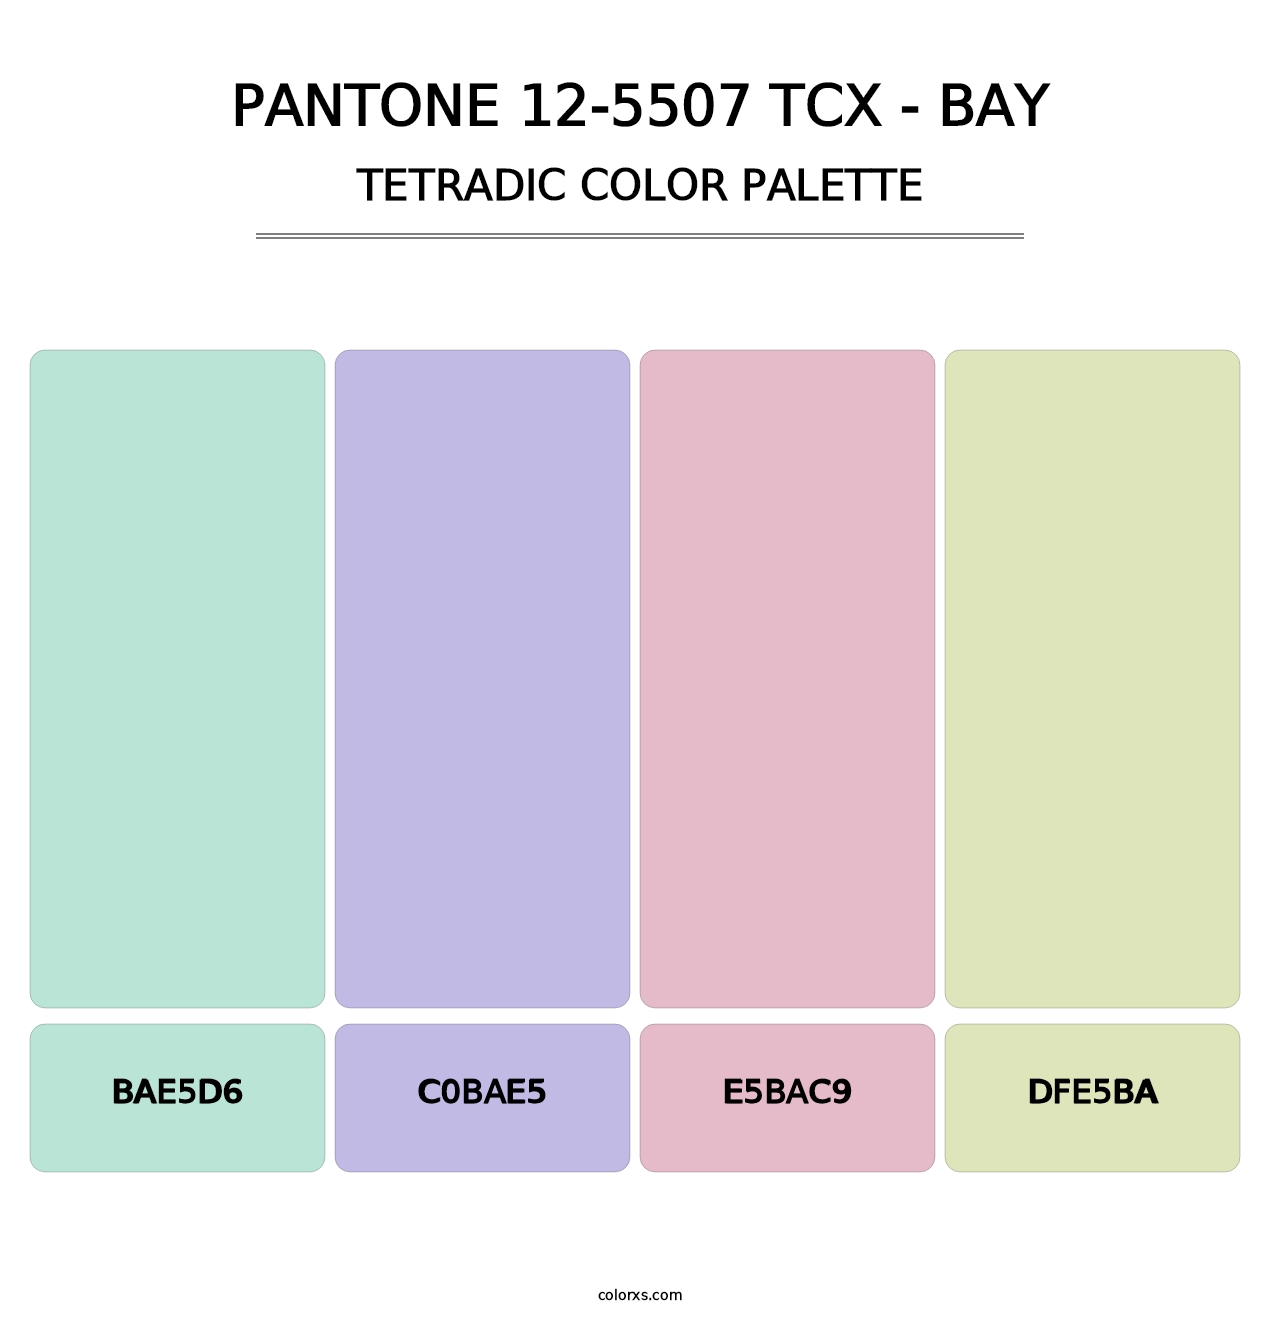 PANTONE 12-5507 TCX - Bay - Tetradic Color Palette